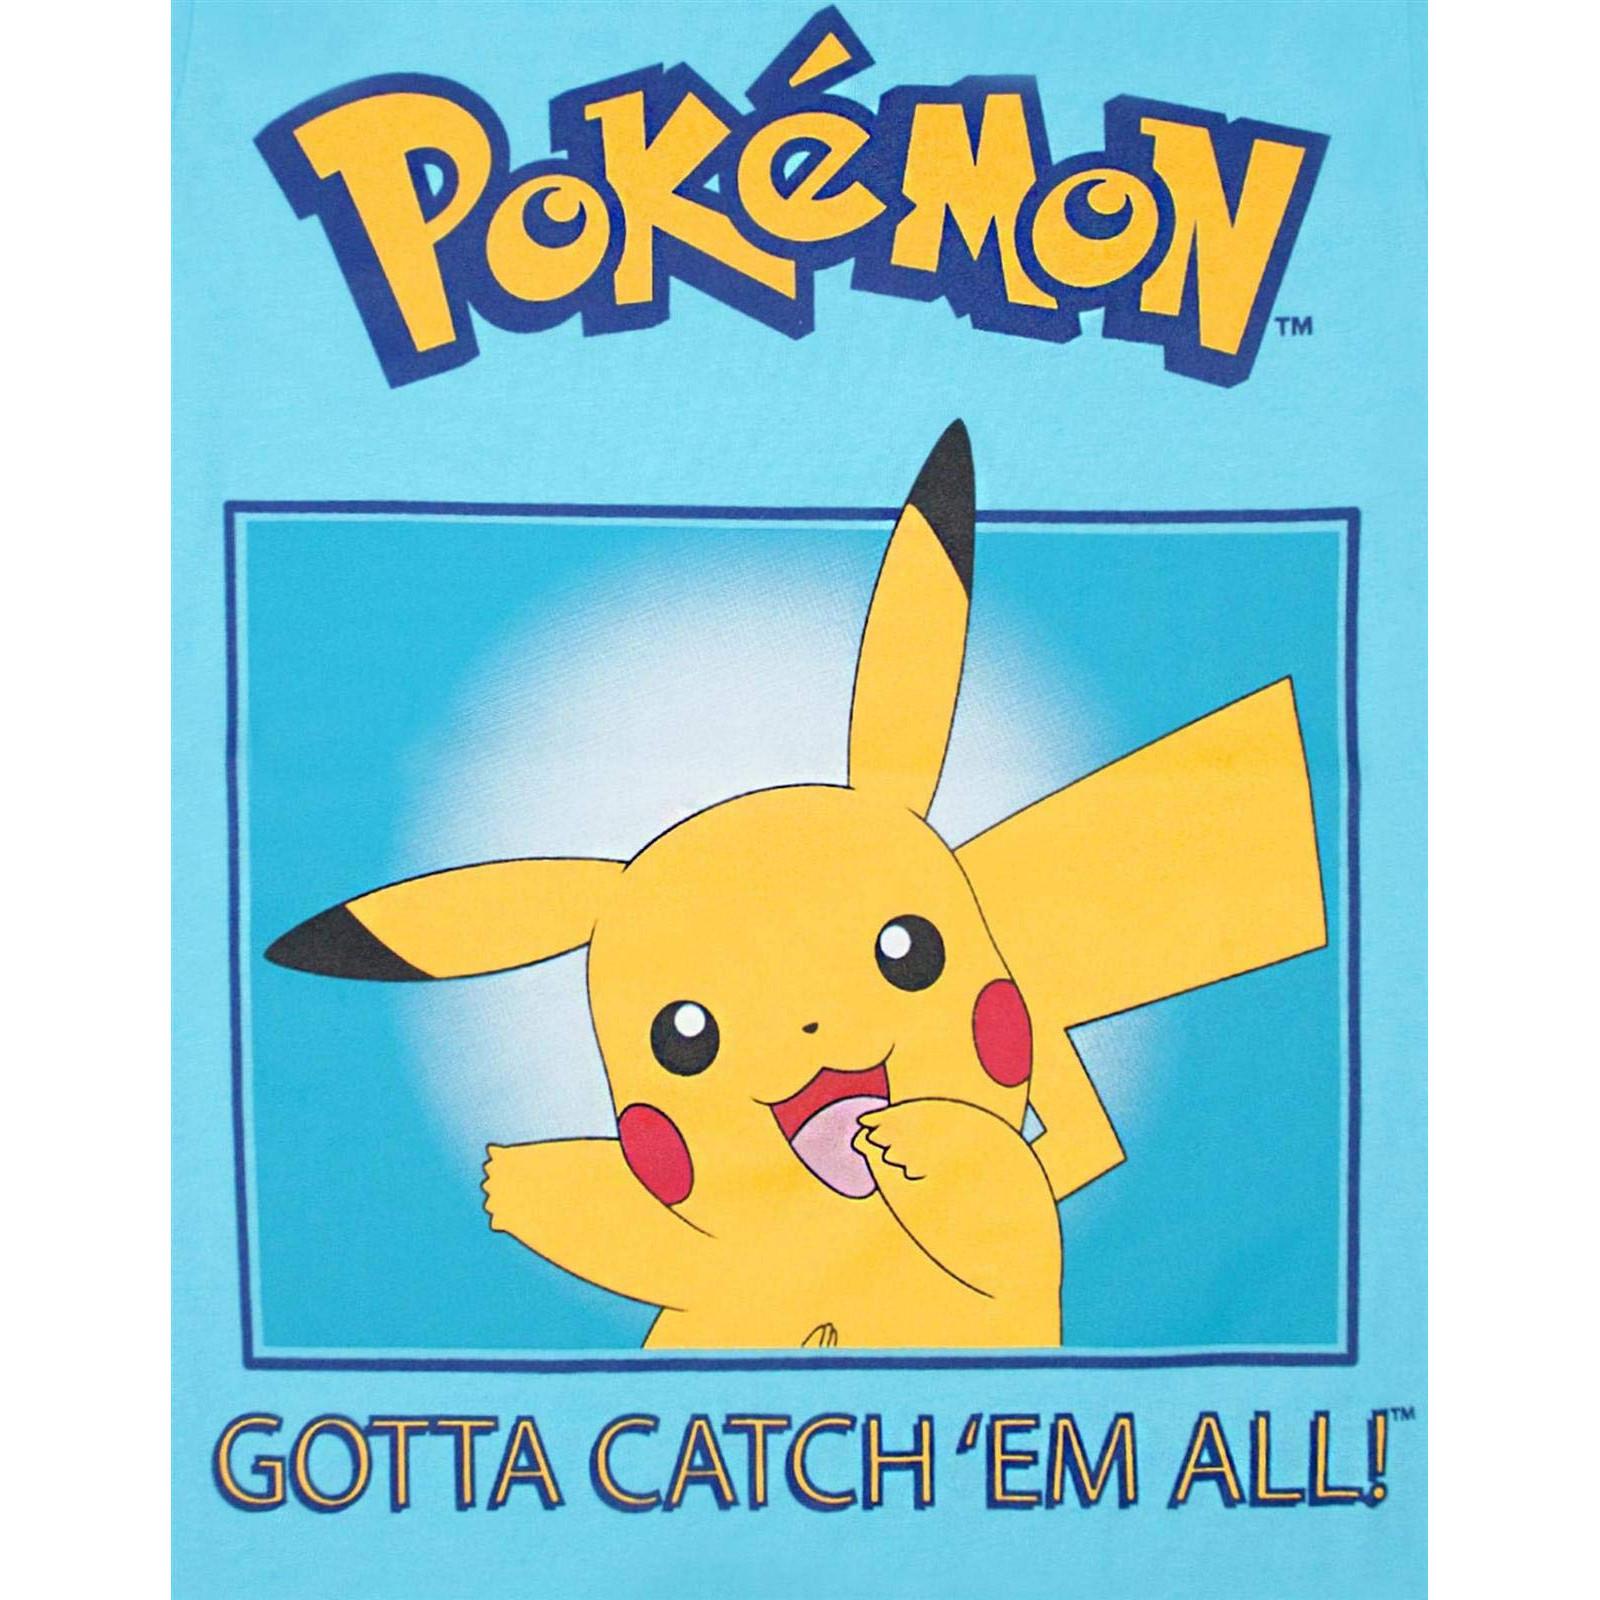 Pokémon  Gotta Catch 'Em All! TShirt 